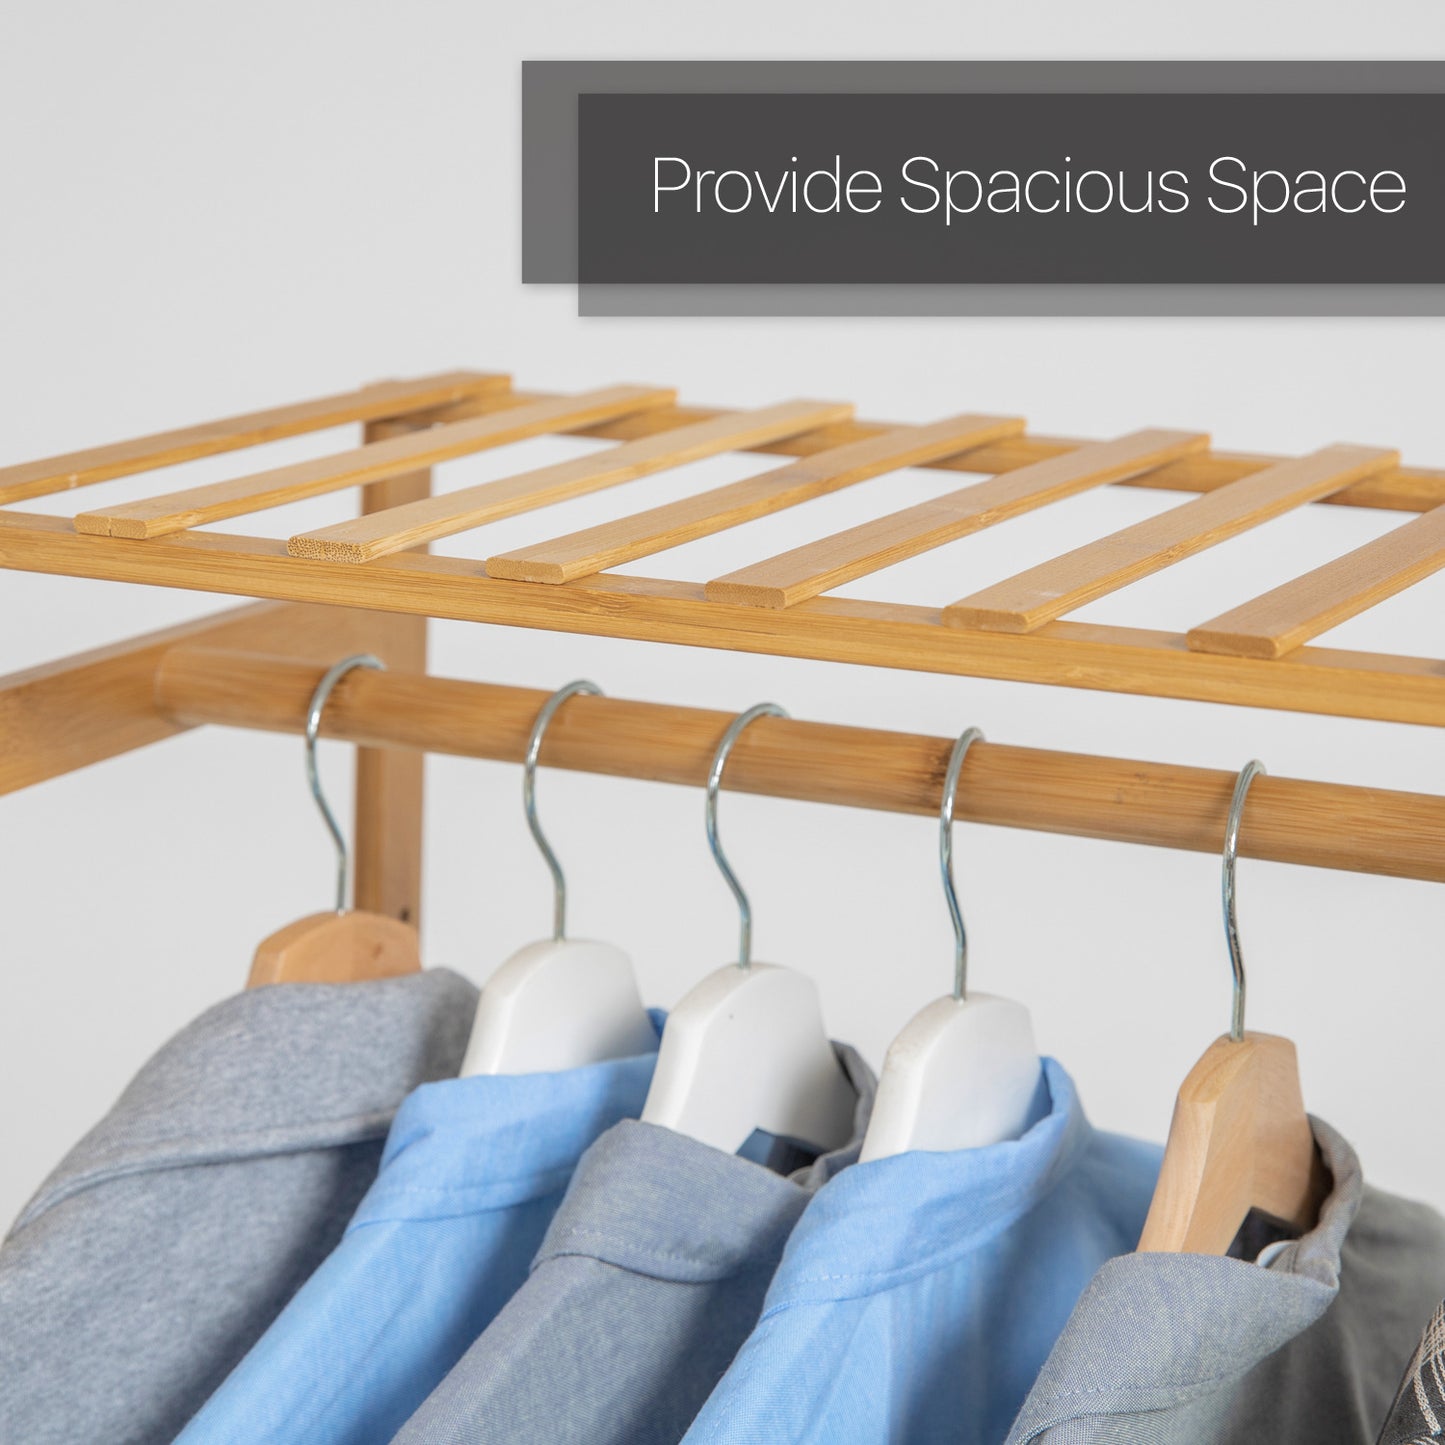 Garment Cabinet Clothes Organizer - Single Rack - Natural